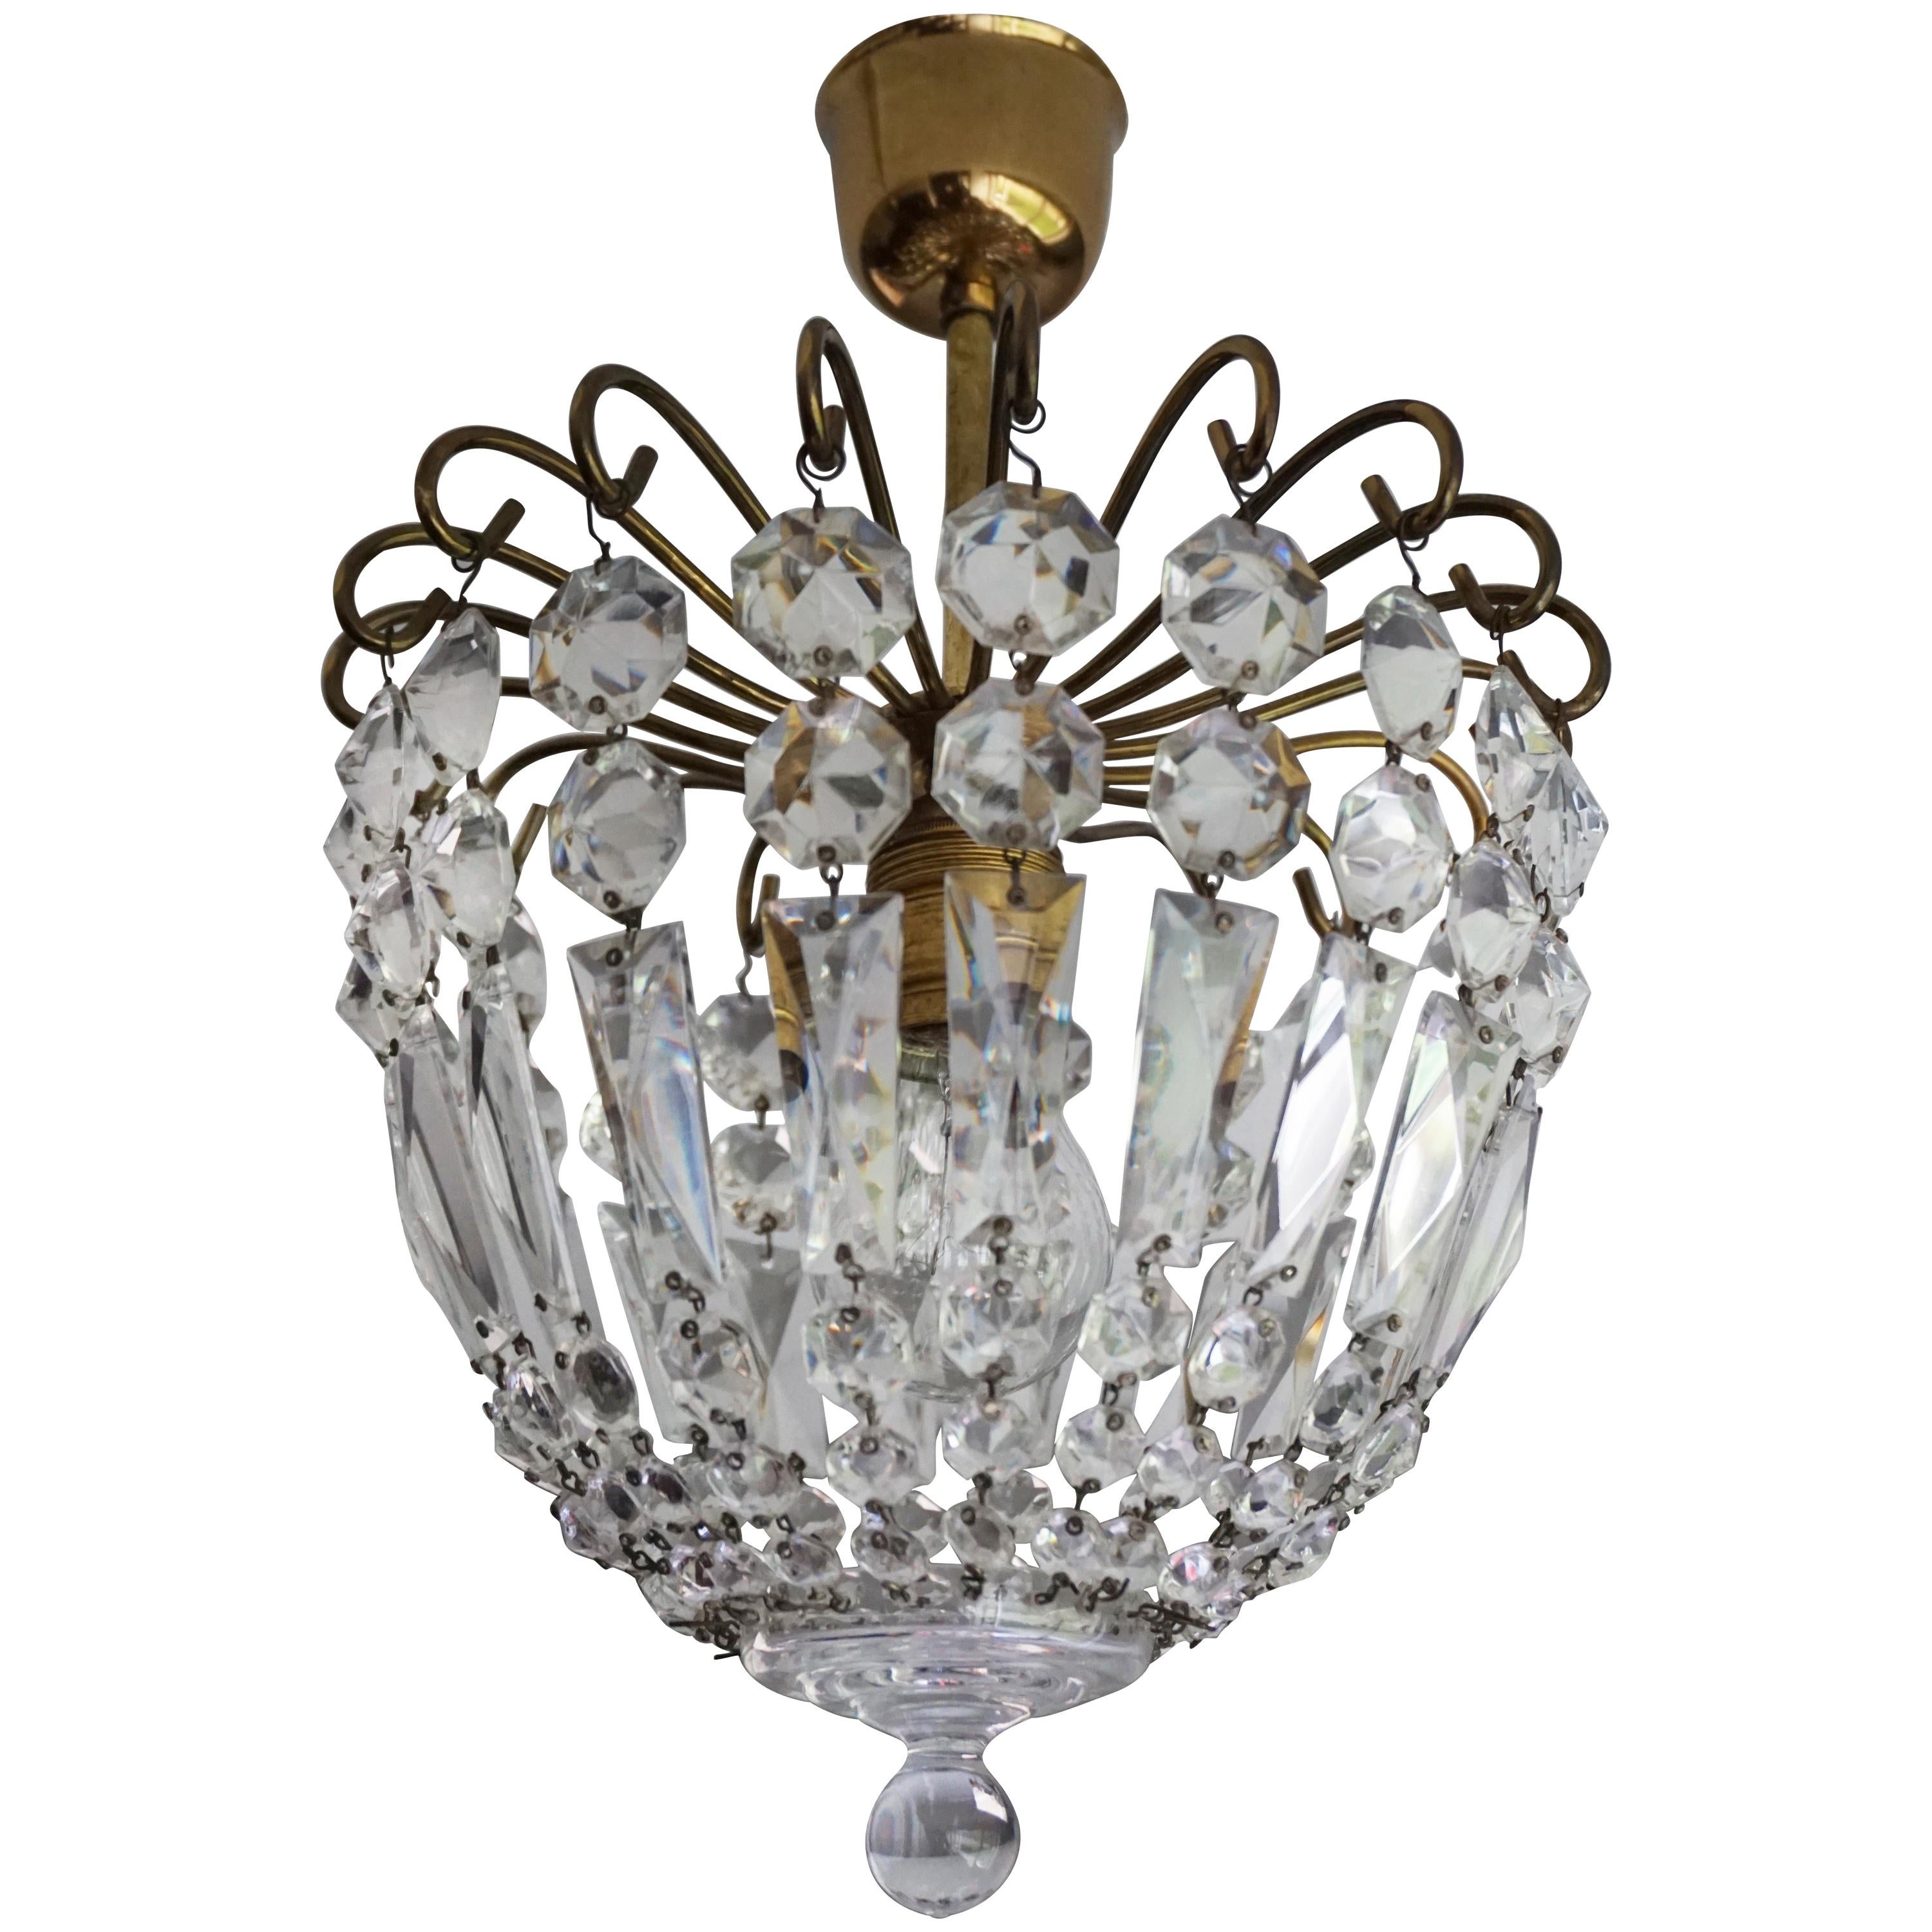 Stylish Little Mid Century Brass and Crystal Glass Murano Pendant Light Fixture